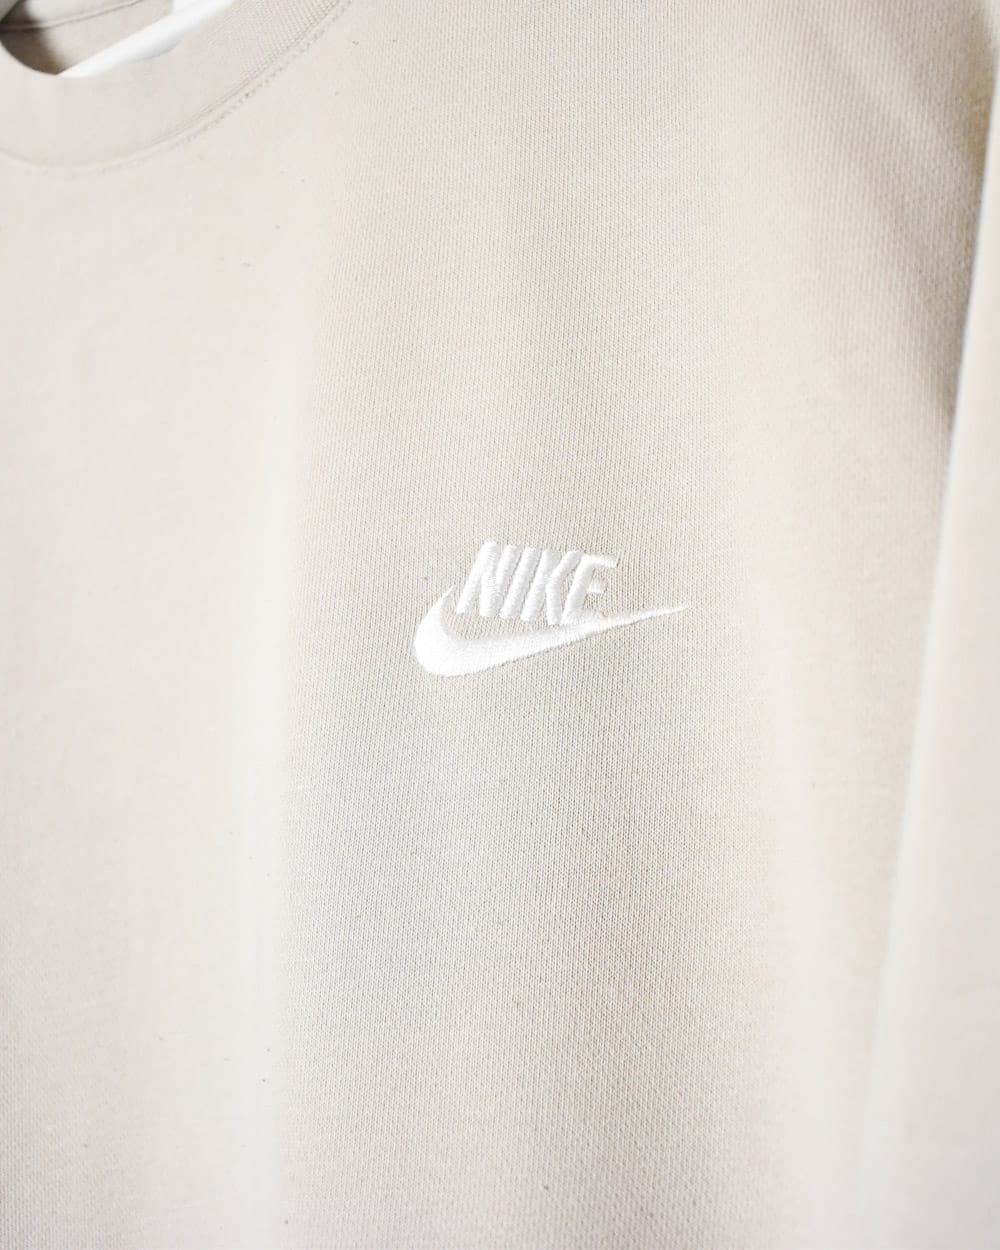 Neutral Nike Sweatshirt - XX-Large